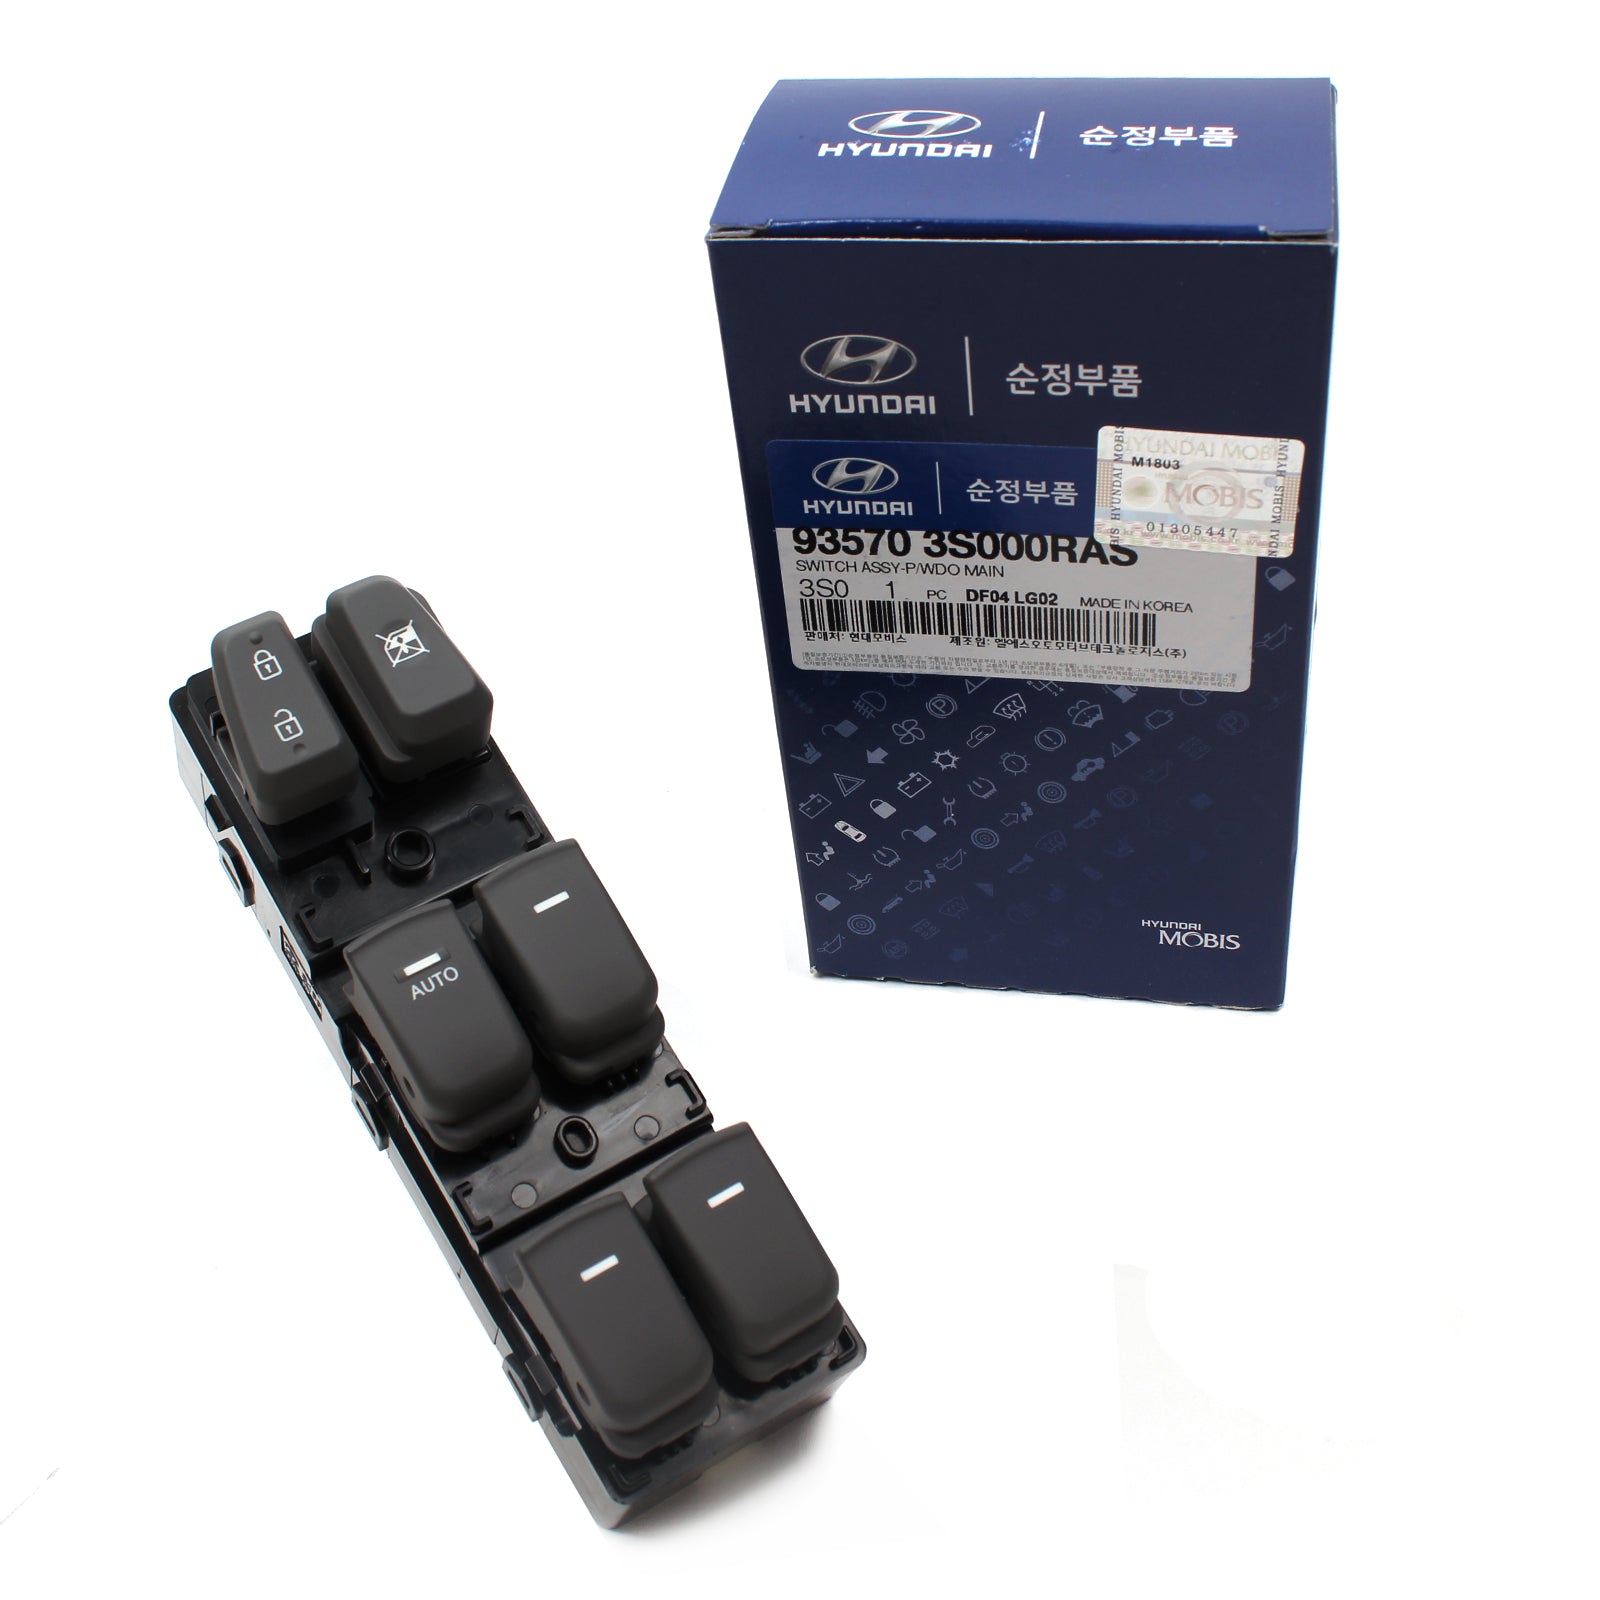 GENUINE Power Window Switch FRONT DRIVER for 11-14 Hyundai Sonata 935703S000RAS